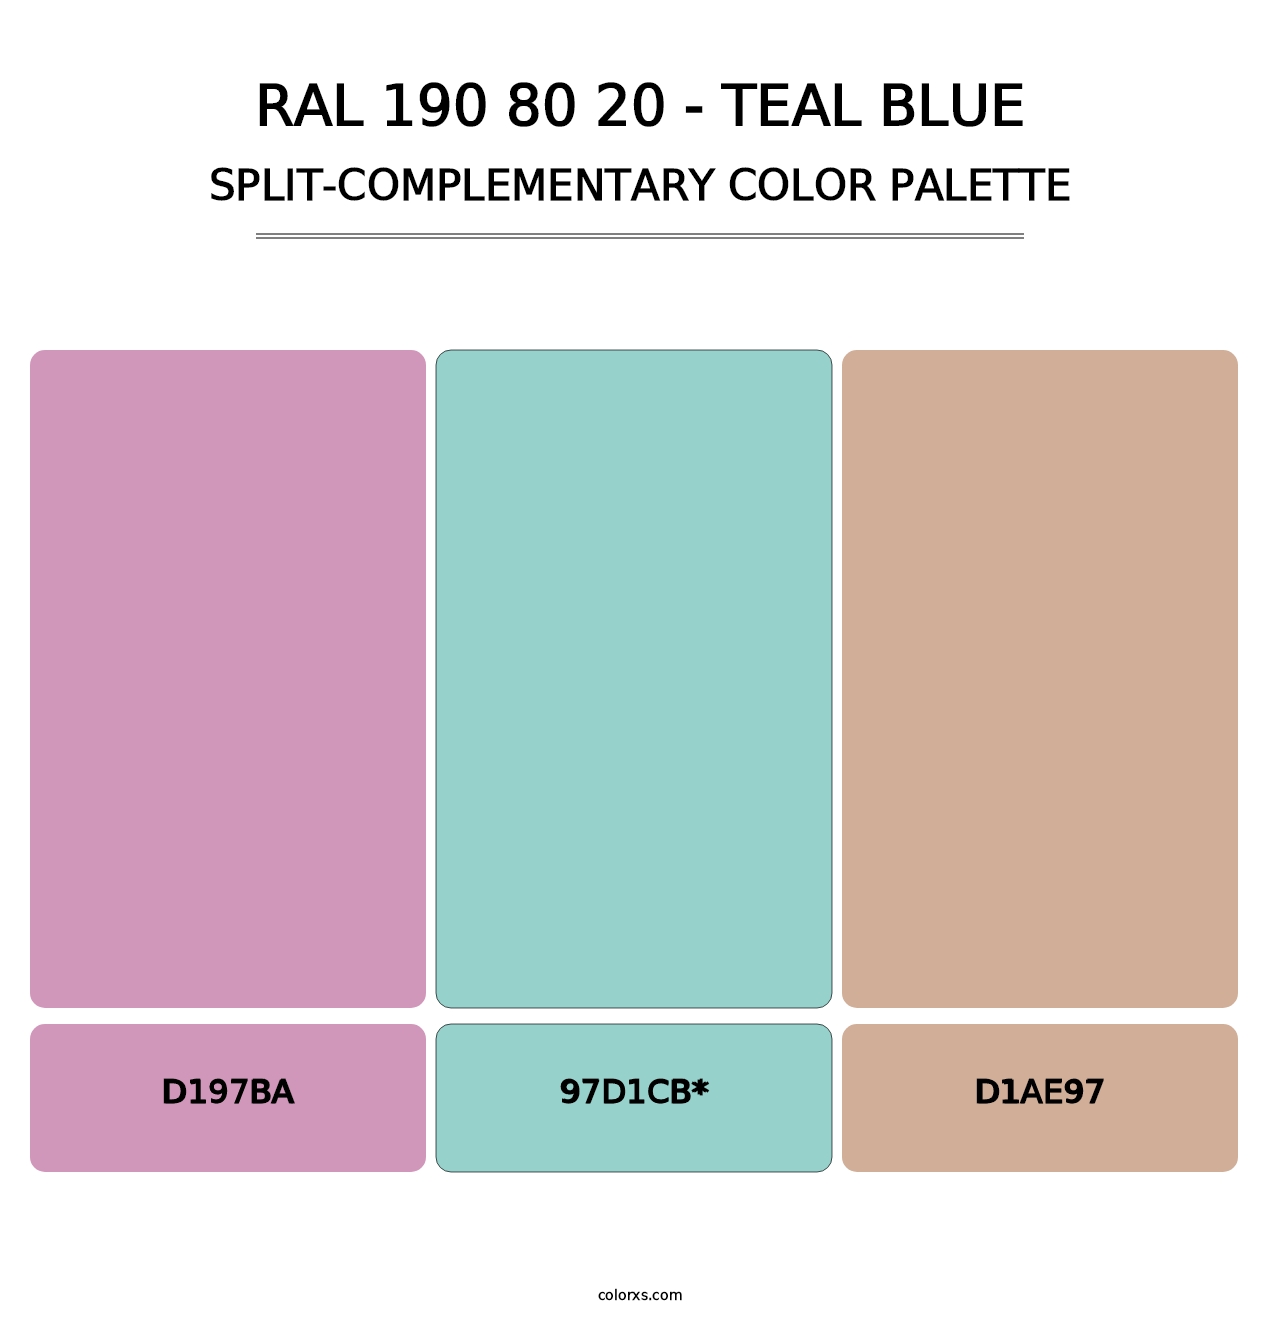 RAL 190 80 20 - Teal Blue - Split-Complementary Color Palette